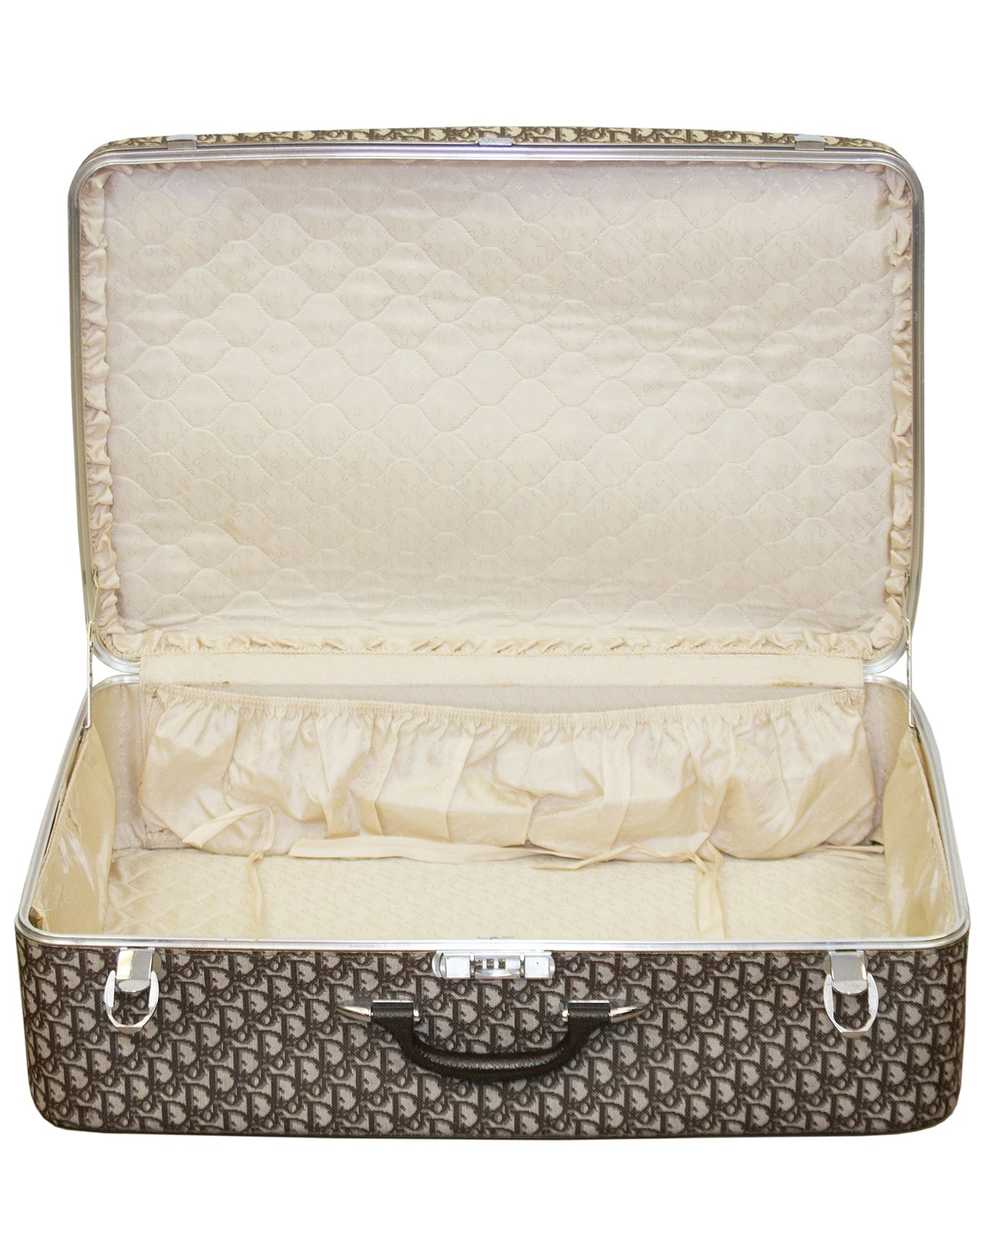 Christian Dior Large Monogram Suitcase - image 2